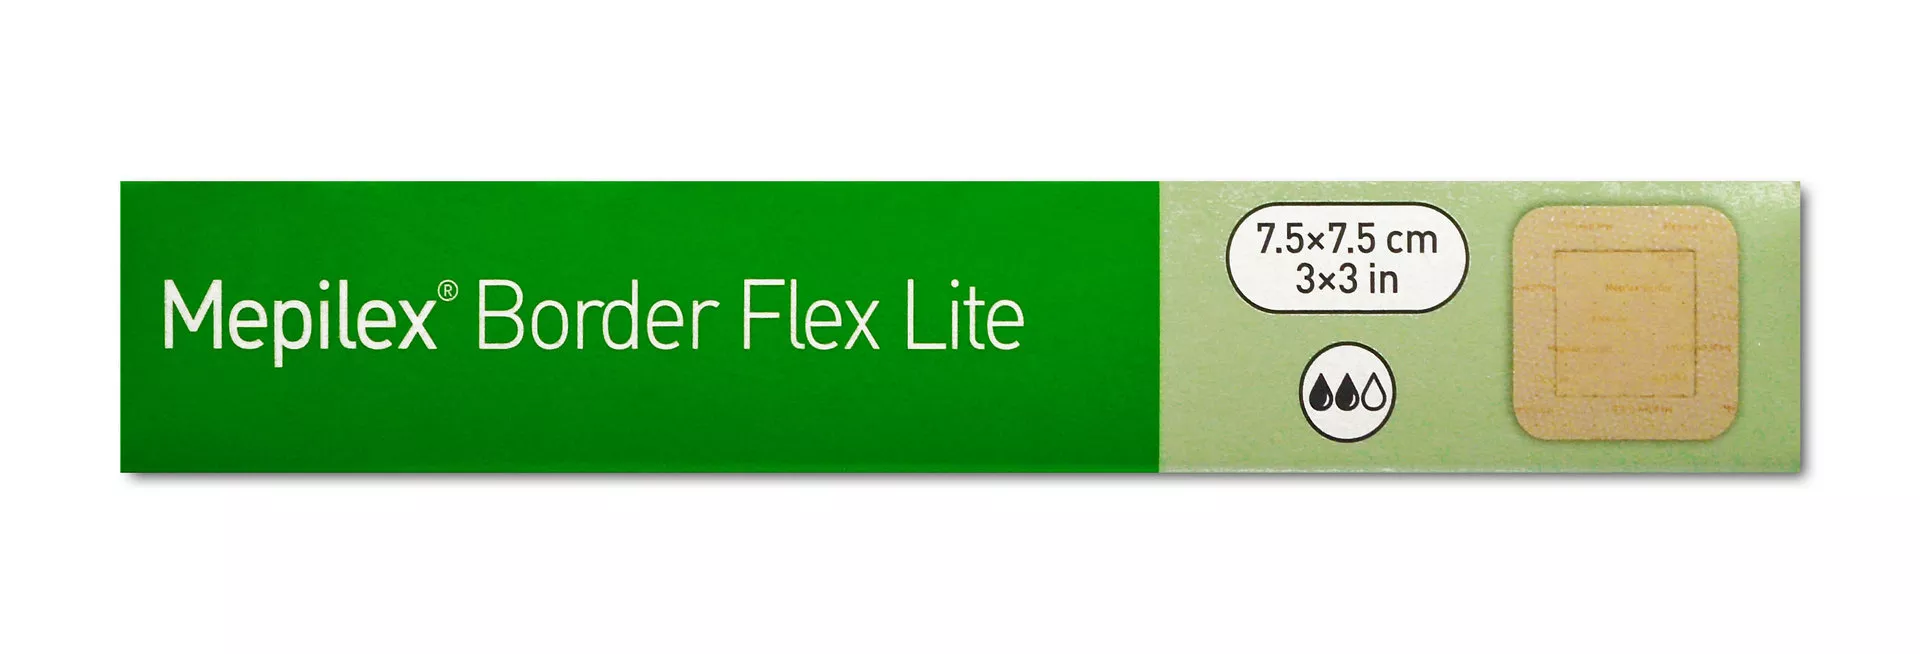 MEPILEX Border Flex Lite Schaumverb. 7.5x7.5 cm, steril, 5 Stück